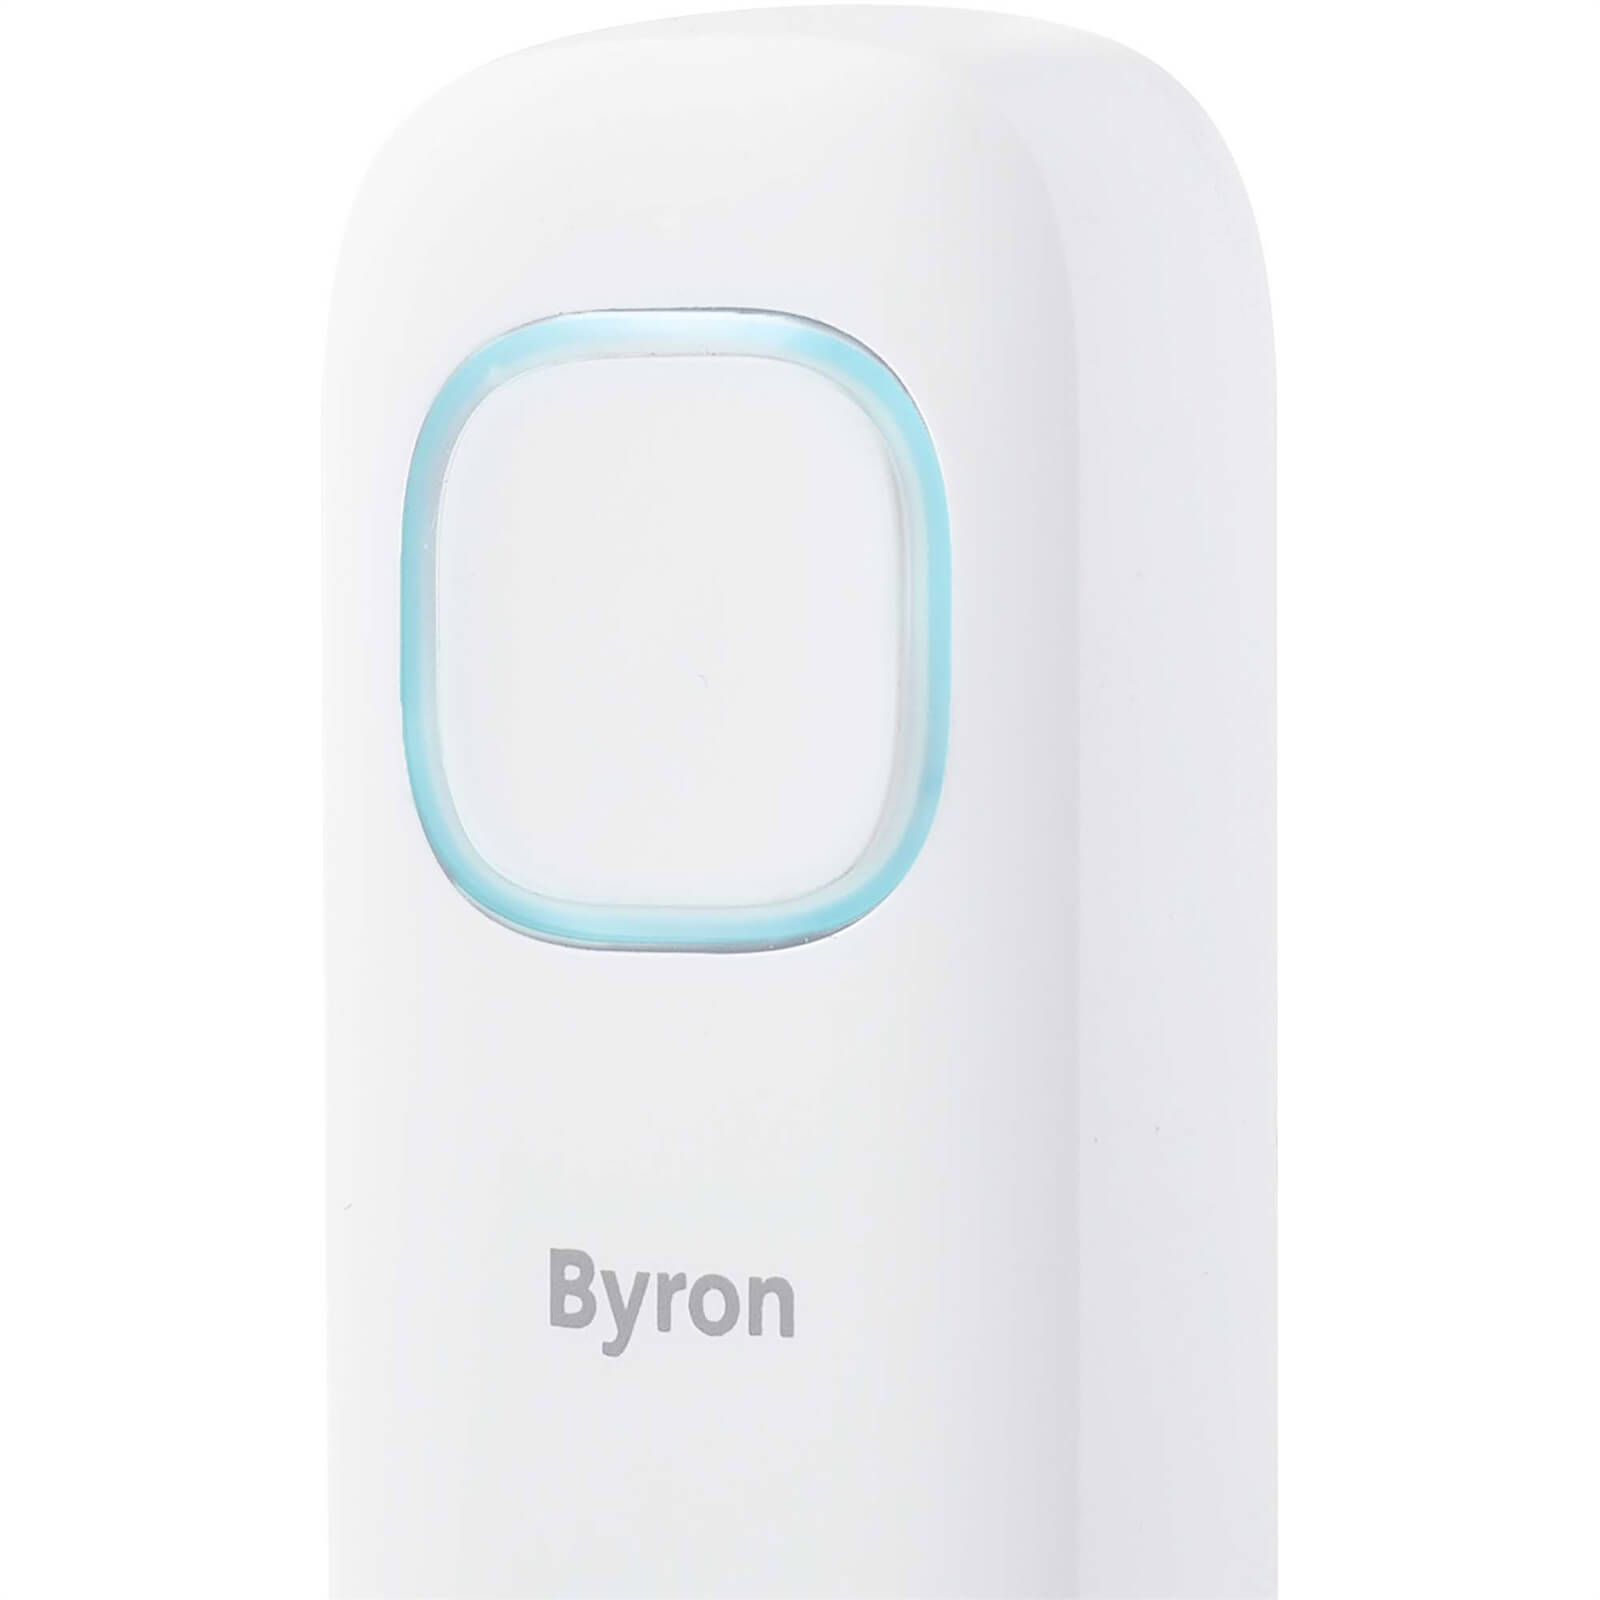 Byron 25931 200m Portable Wireless Doorbell set